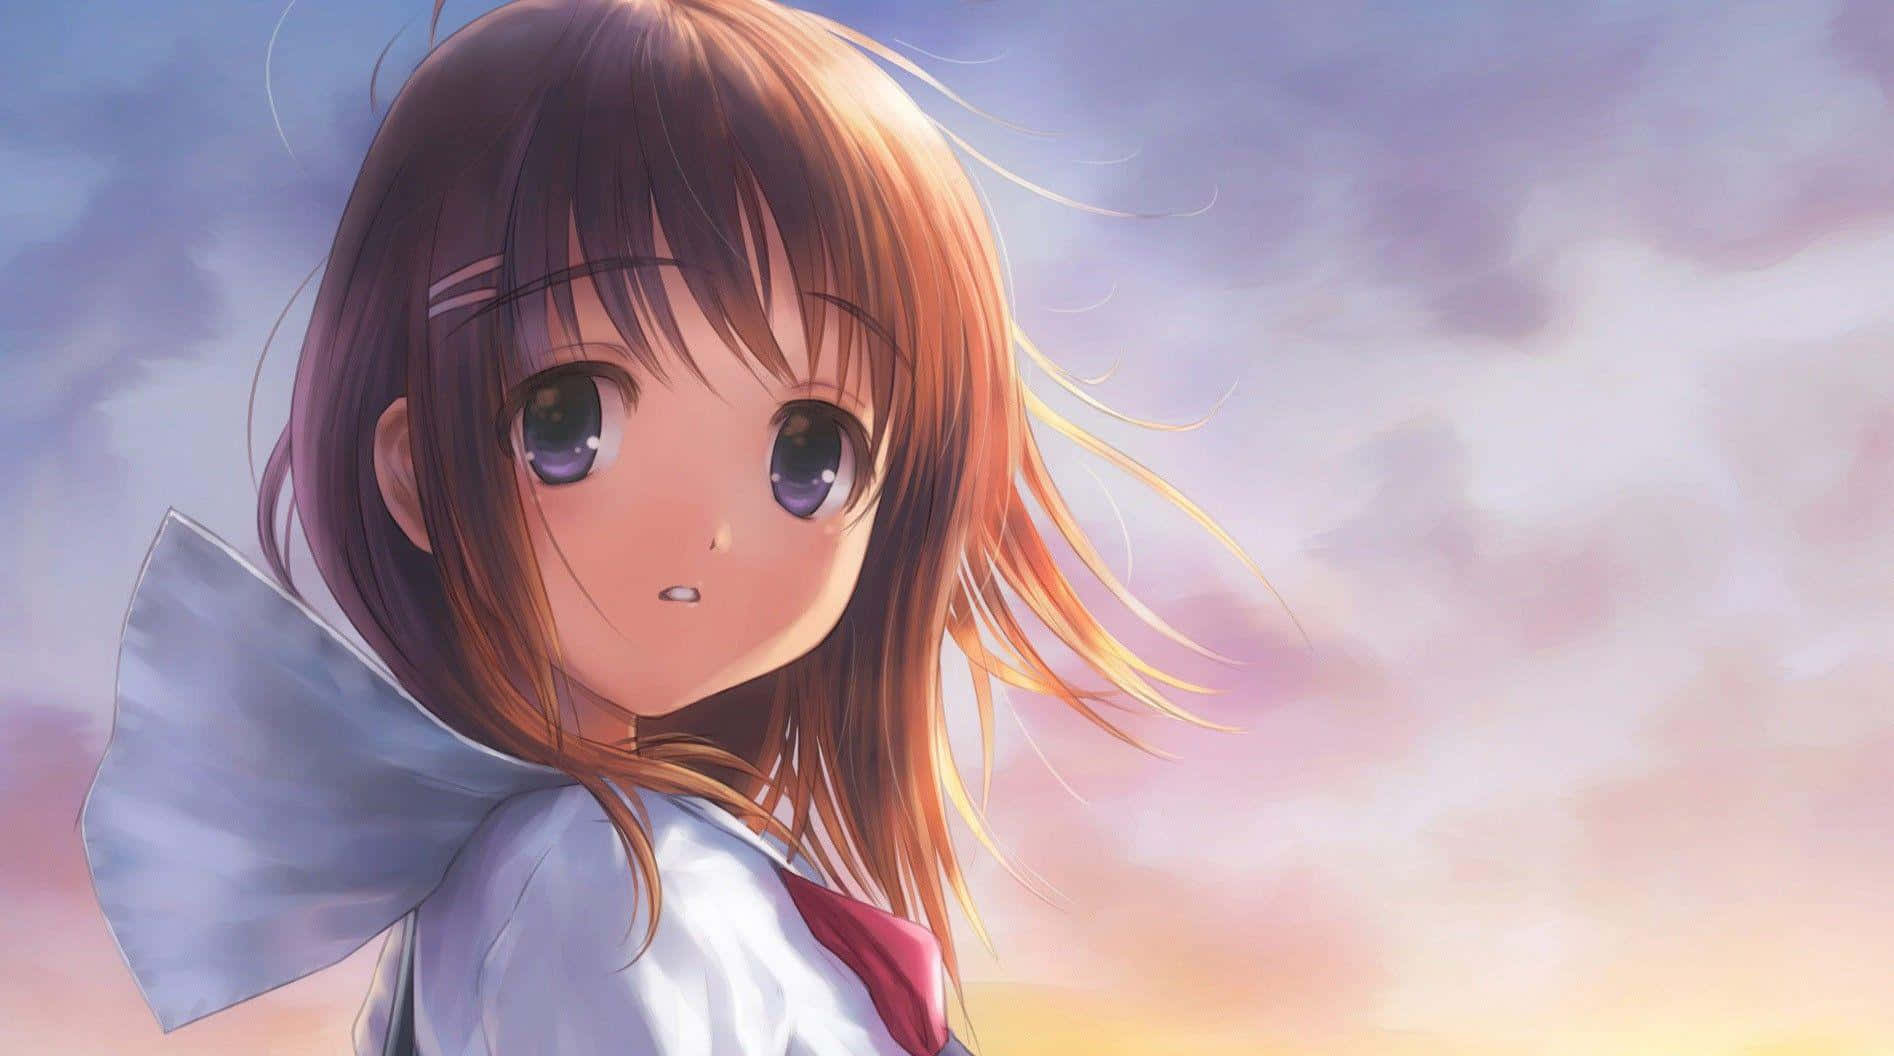 A Cute Kawaii Anime Girl Smiles For The Camera. Wallpaper